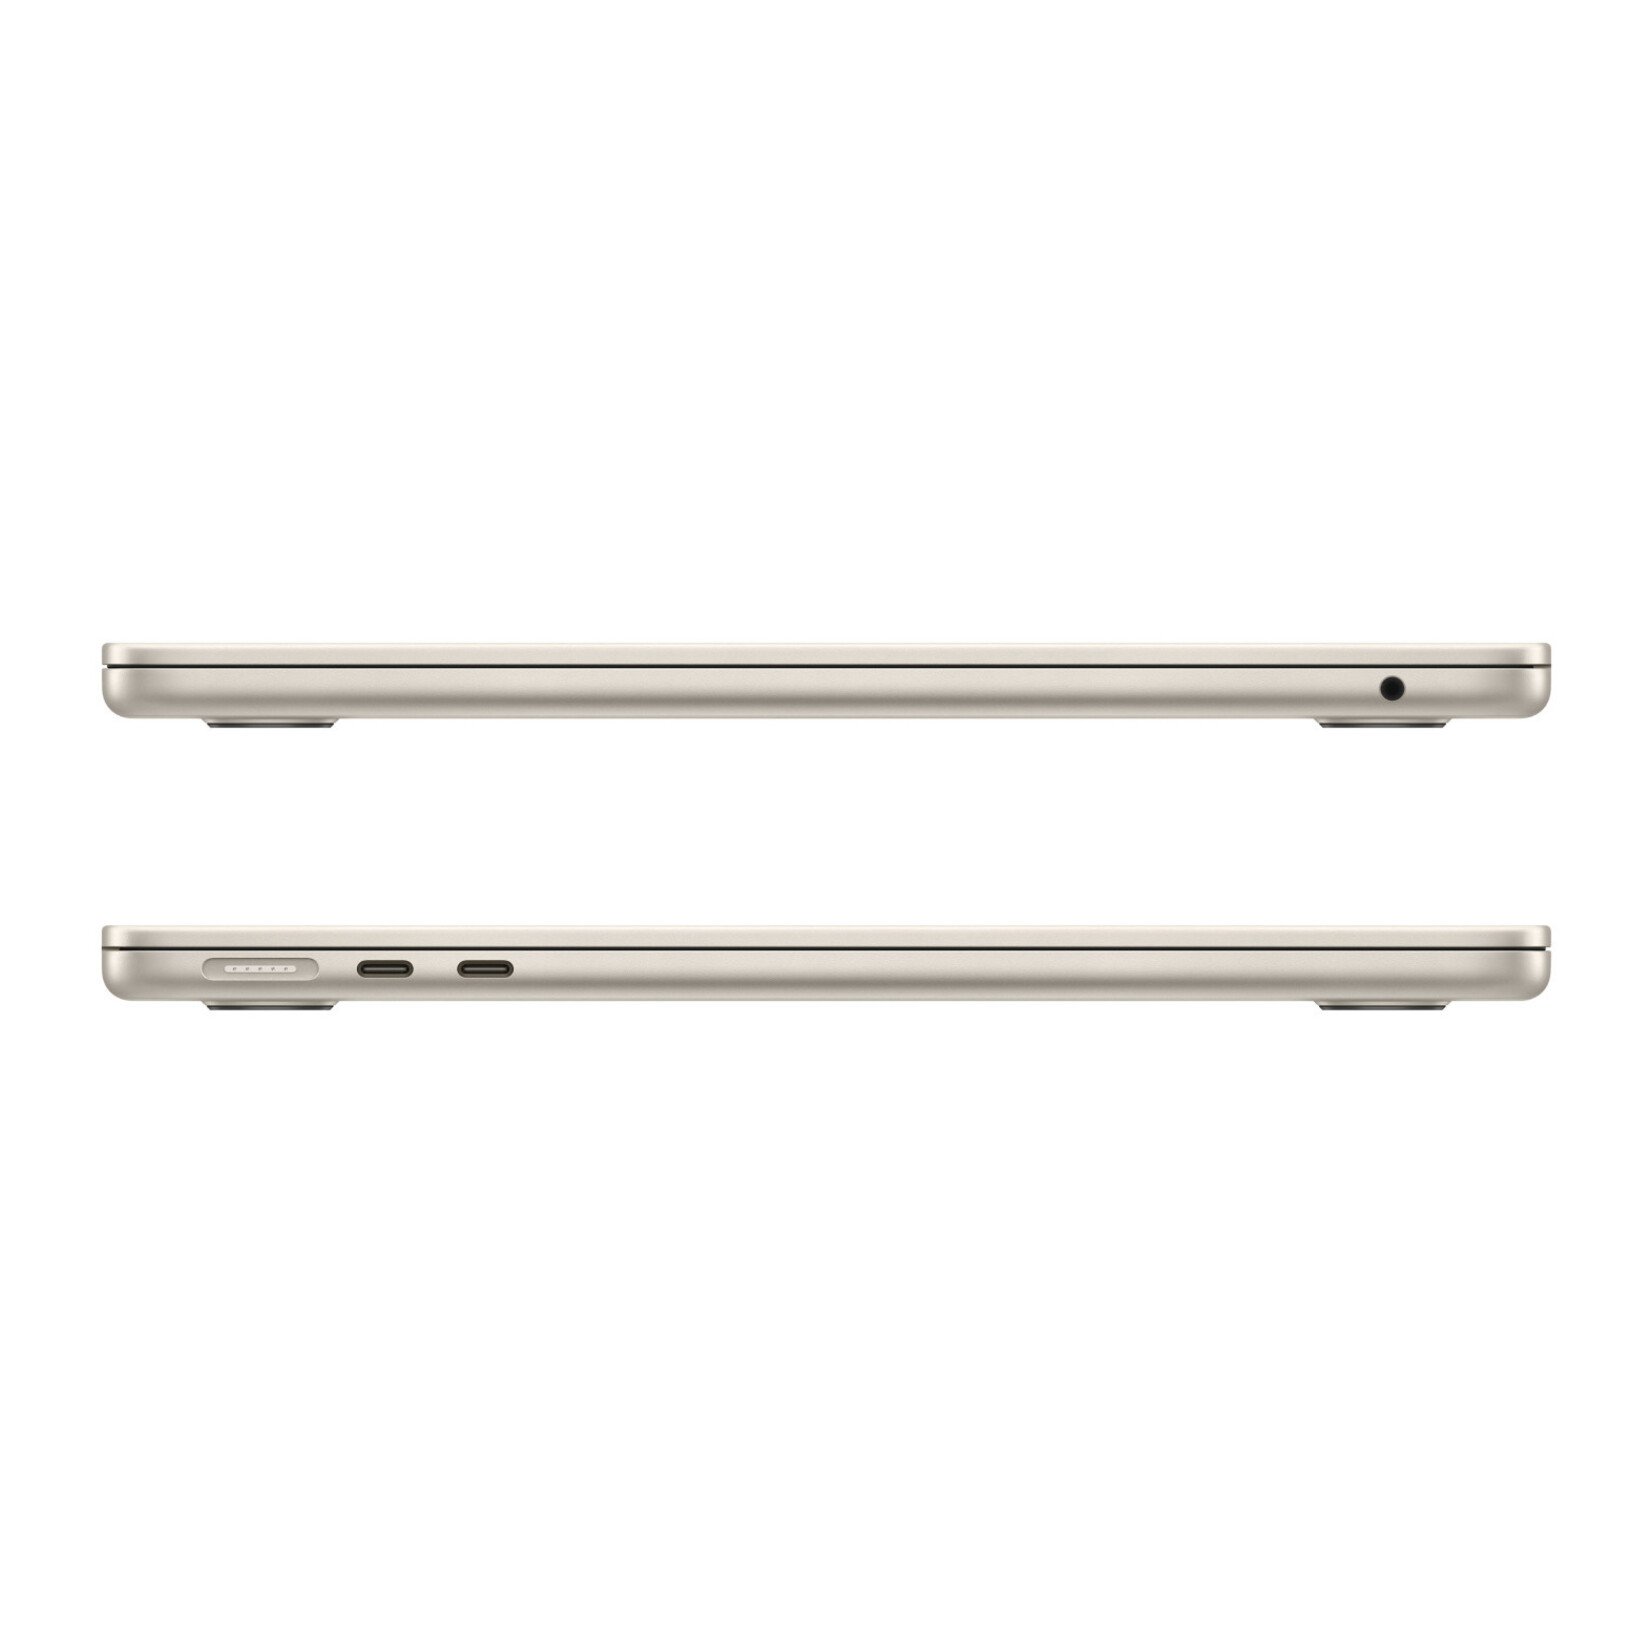 Apple 13-inch MacBook Air - M2 Chip - 512GB - Starlight